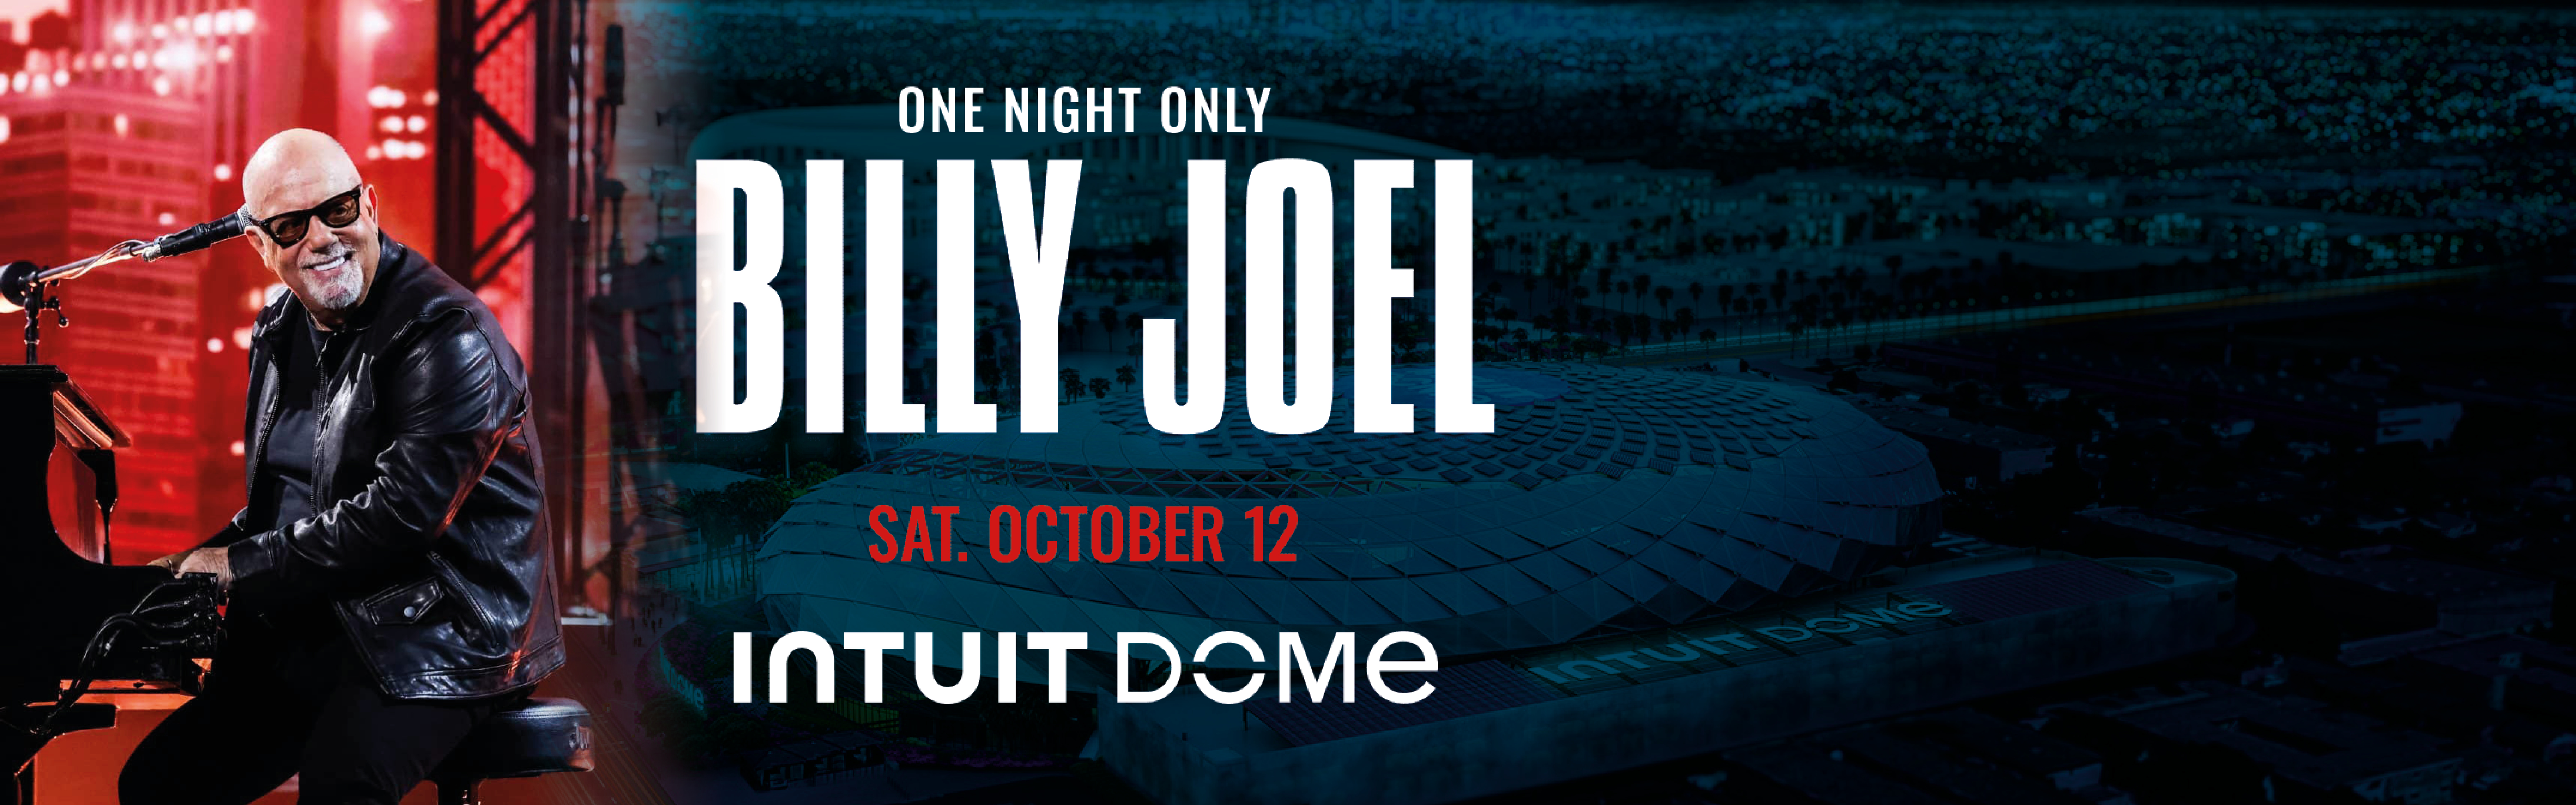 Billy Joel concert Banner-2